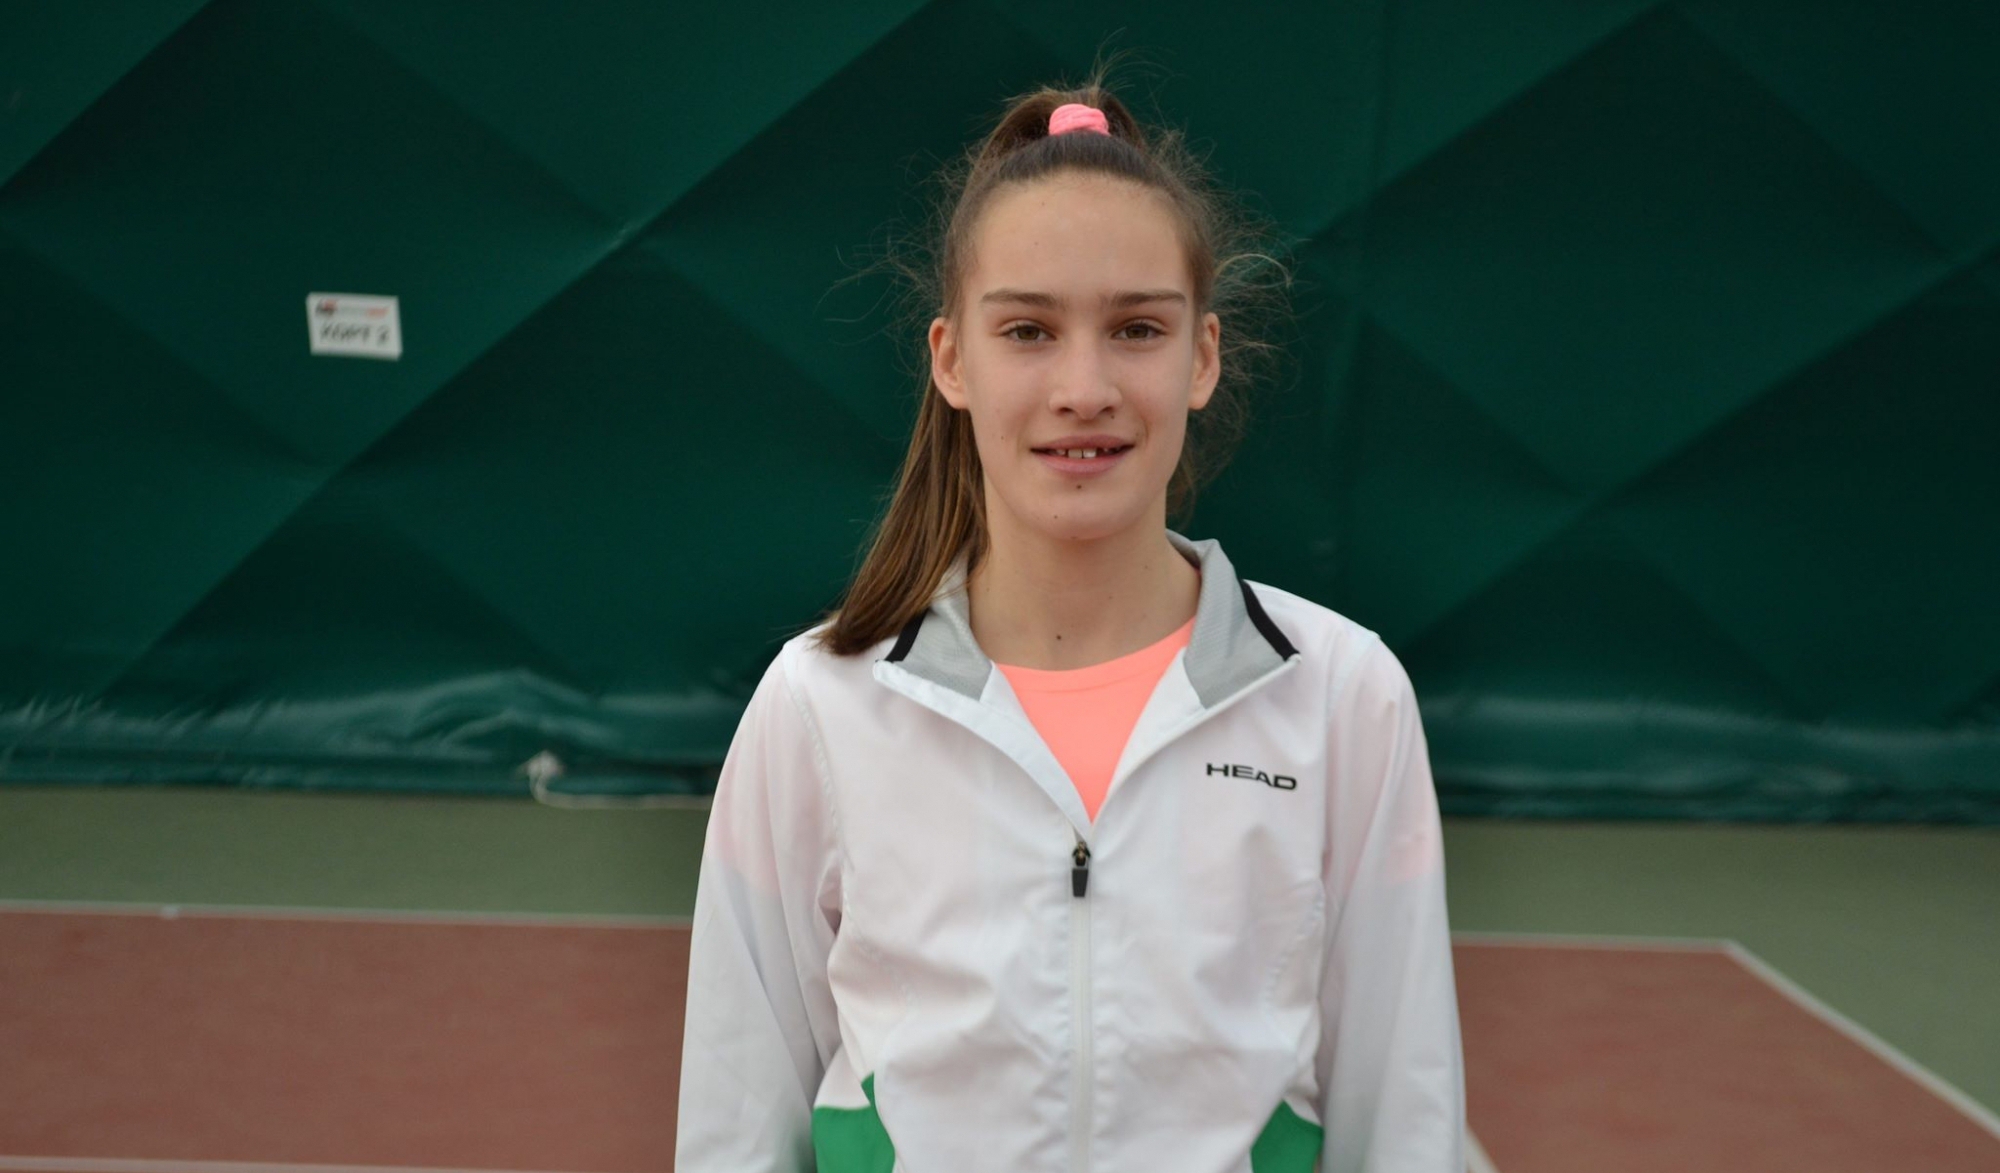 Българска победа в Мелбърн: 18-годишната Глушкова с паметен дебют при девойките